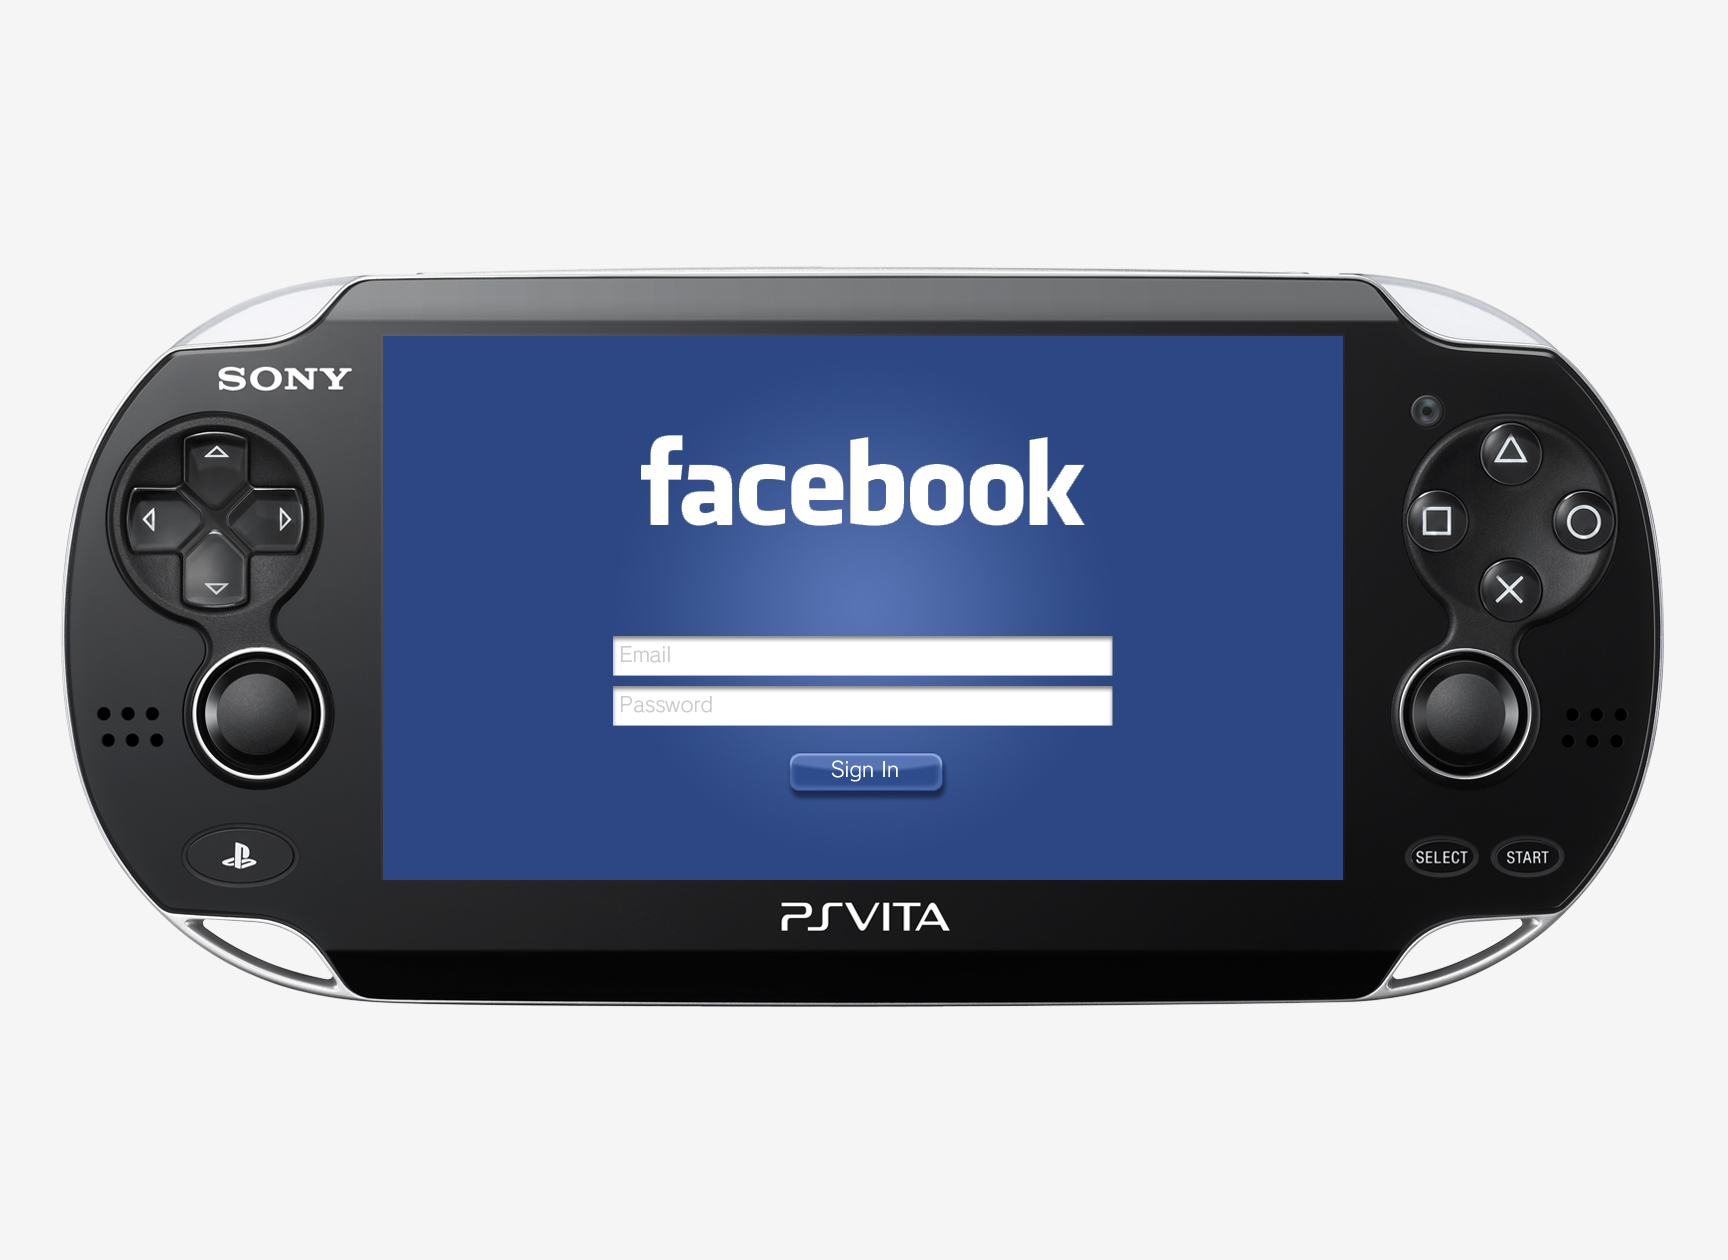 PlayStation-Vita_2011_08-18-11_001